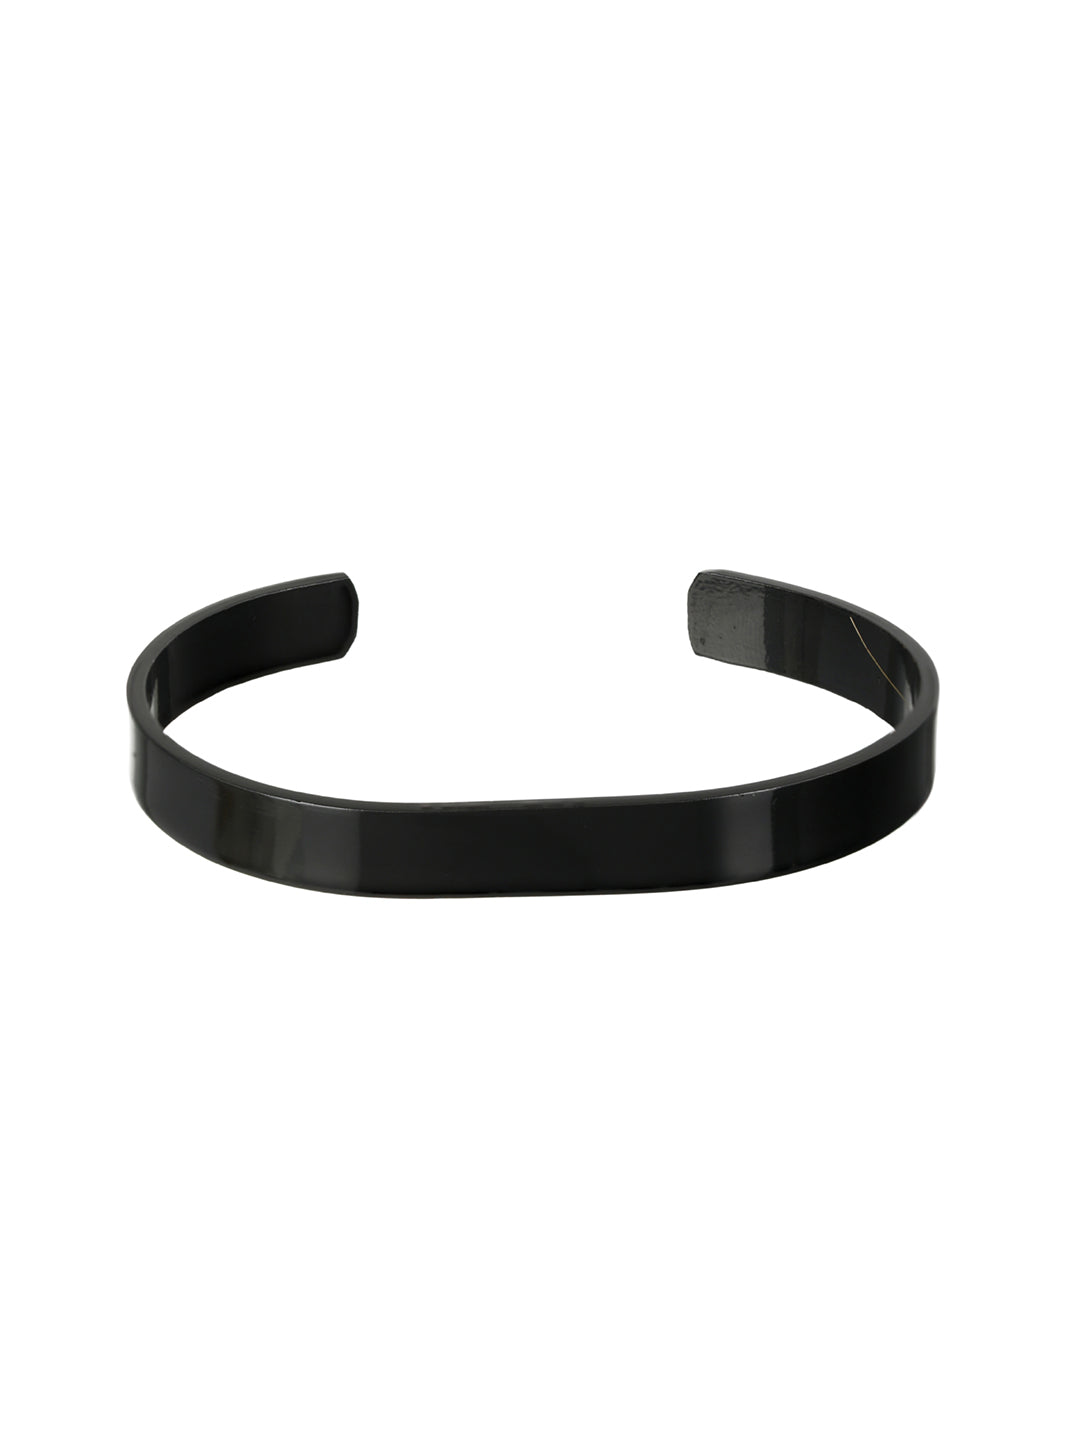 Black Cuff Bracelet for Men- Custom Coordinates Engraved - GPS -longit